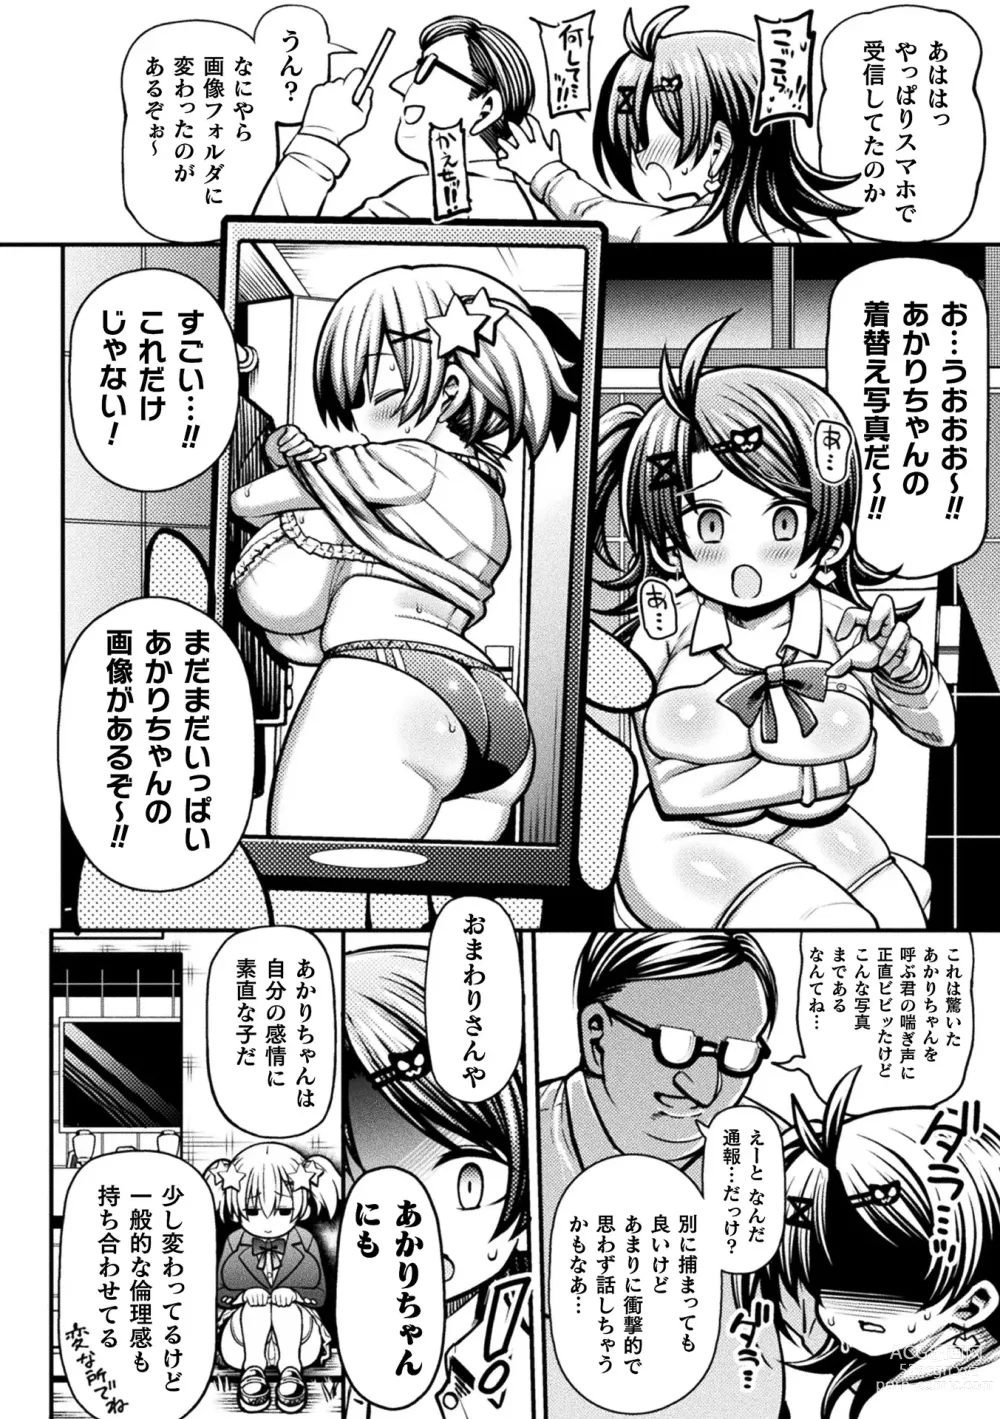 Page 22 of manga Mesugaki Wakara se Game! Episode 2